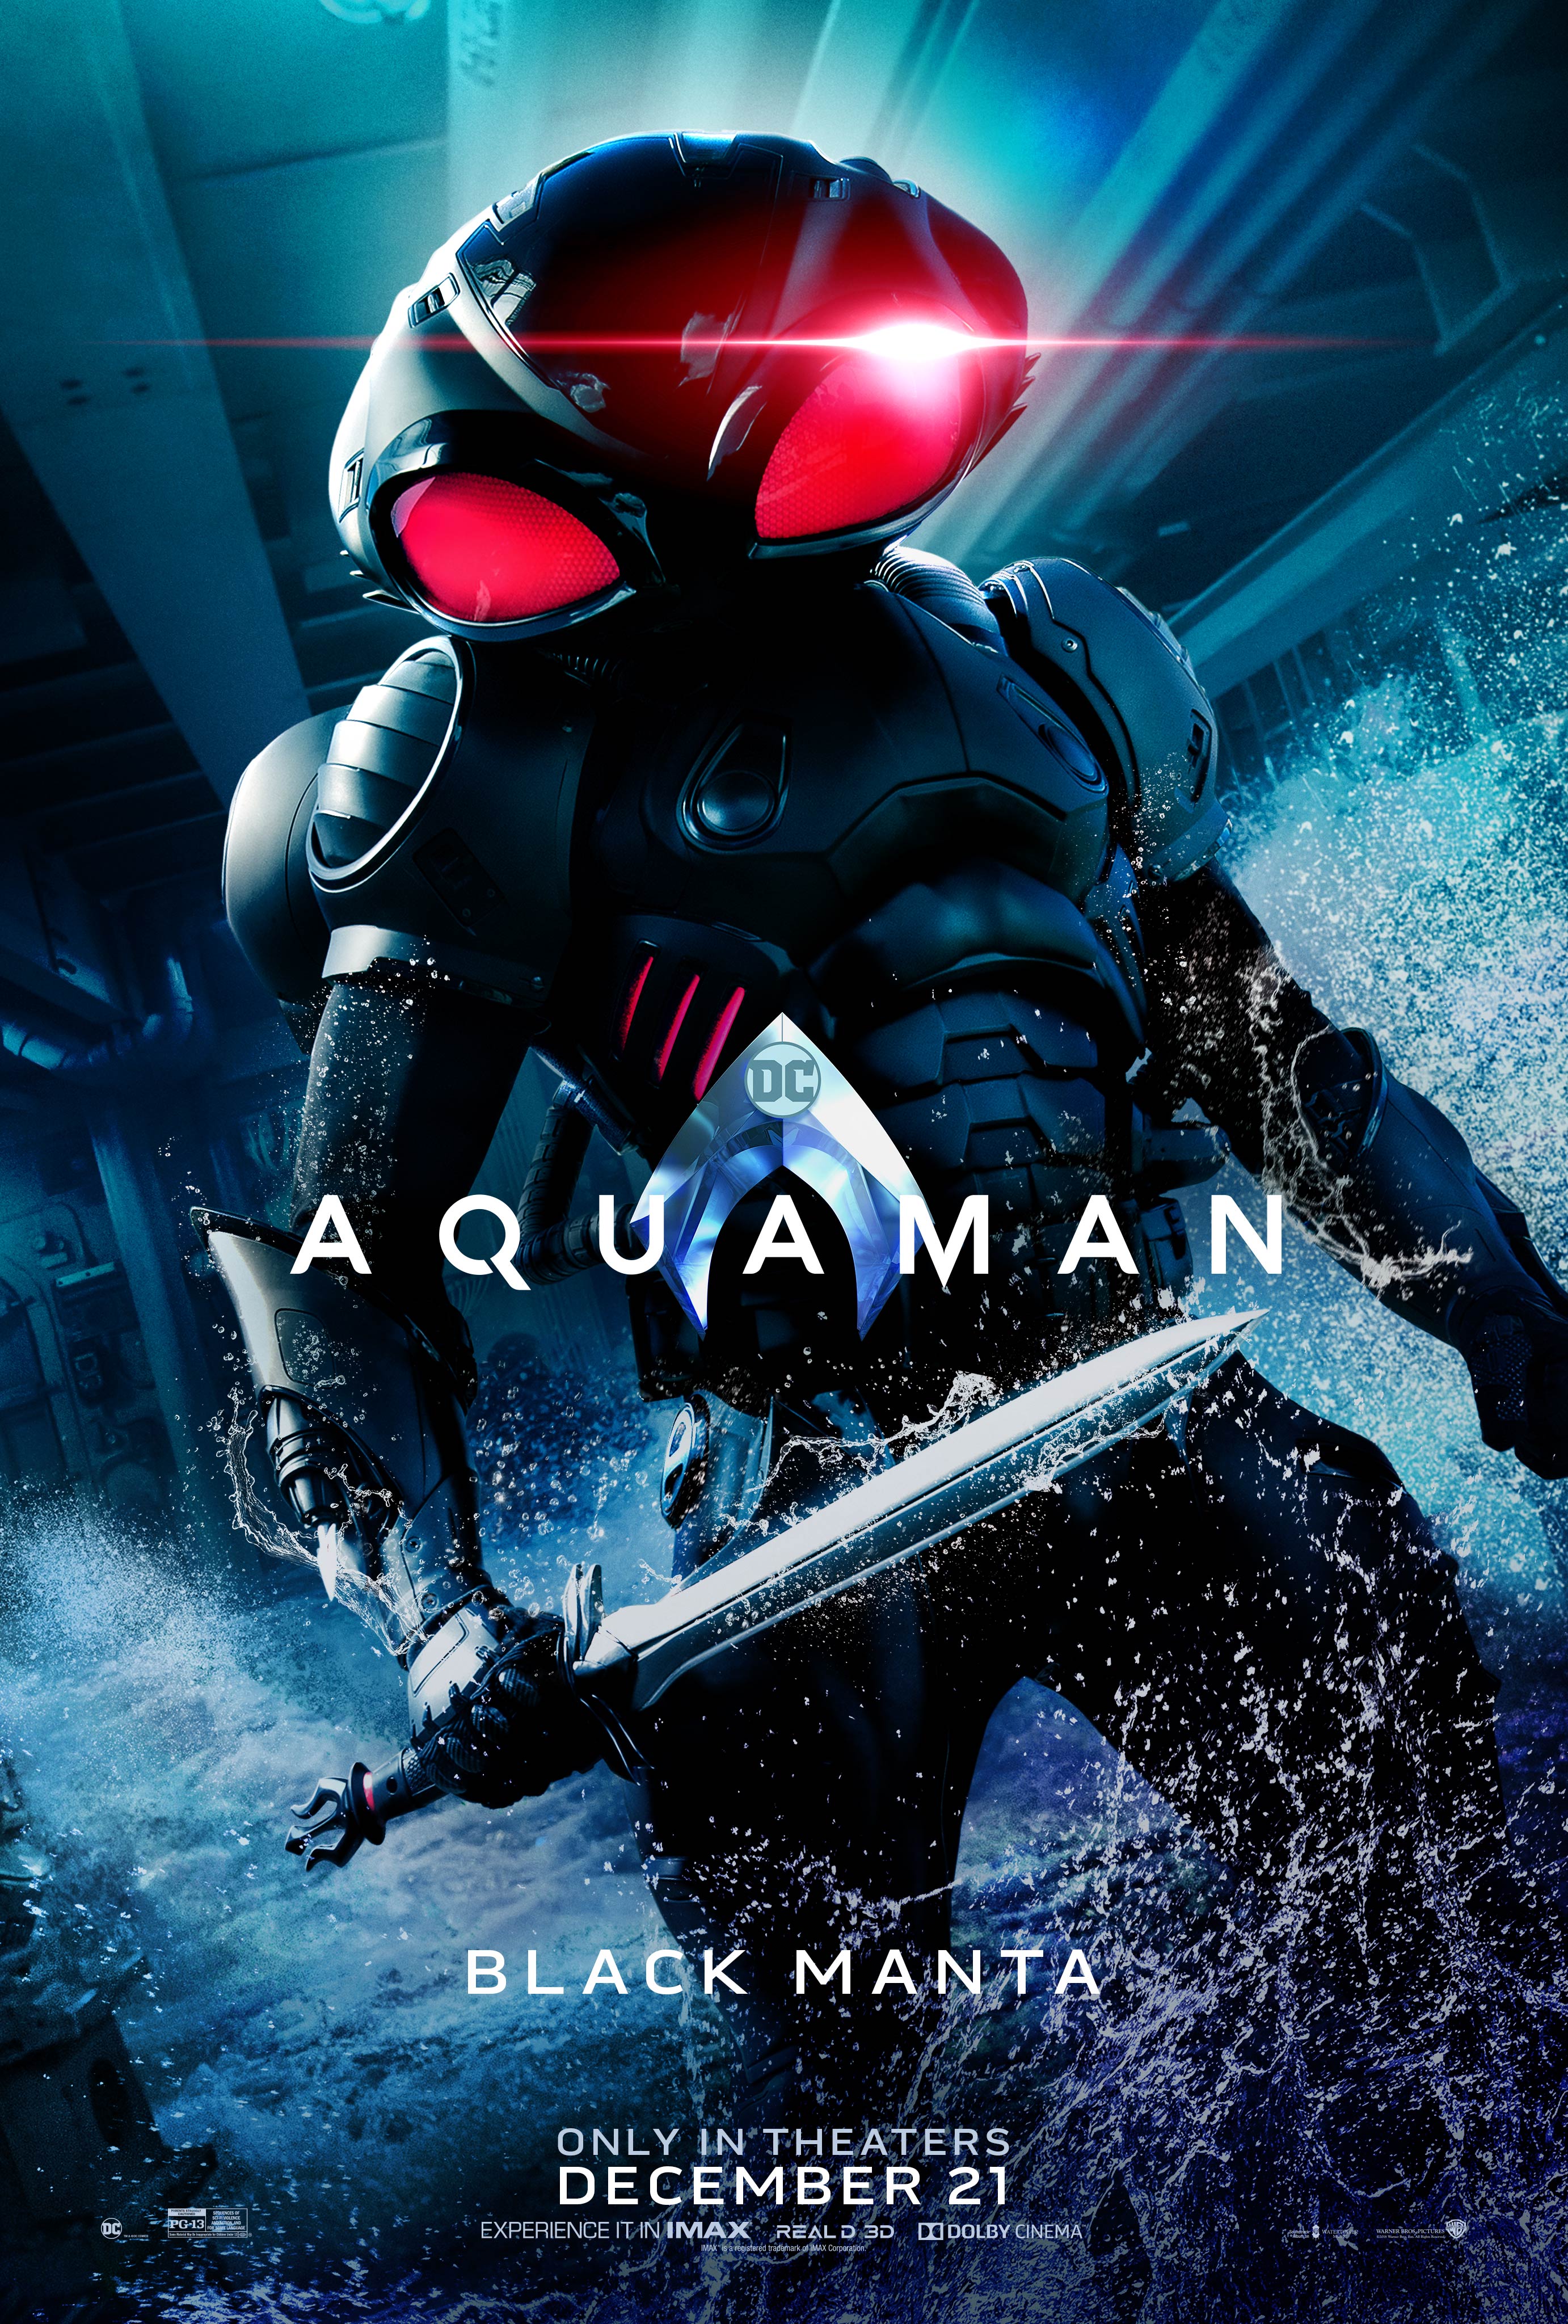 Aquaman (2018) Character Poster Abdul Mateen II As David Kane Black Manta: DC Extended Universe Photo